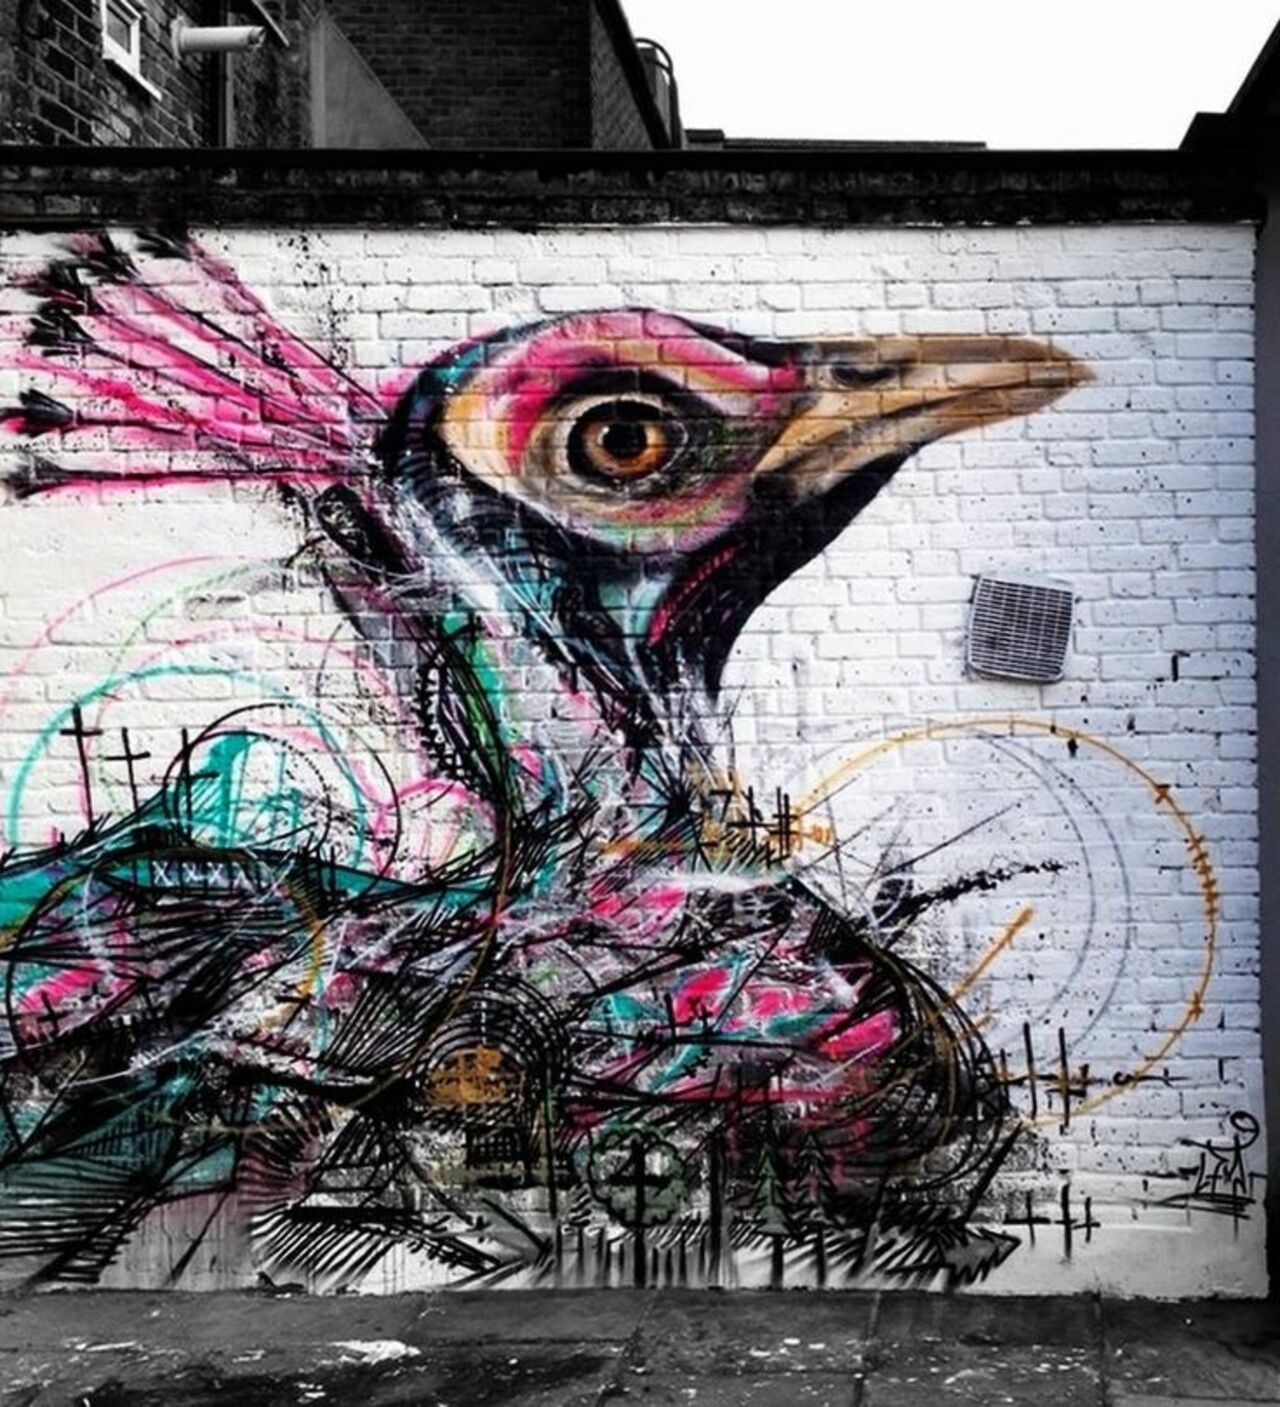 L7m

#London #UK

#Graffiti #StreetArt #Mural #painting #Urban #Art http://t.co/bpwbe0FSMP